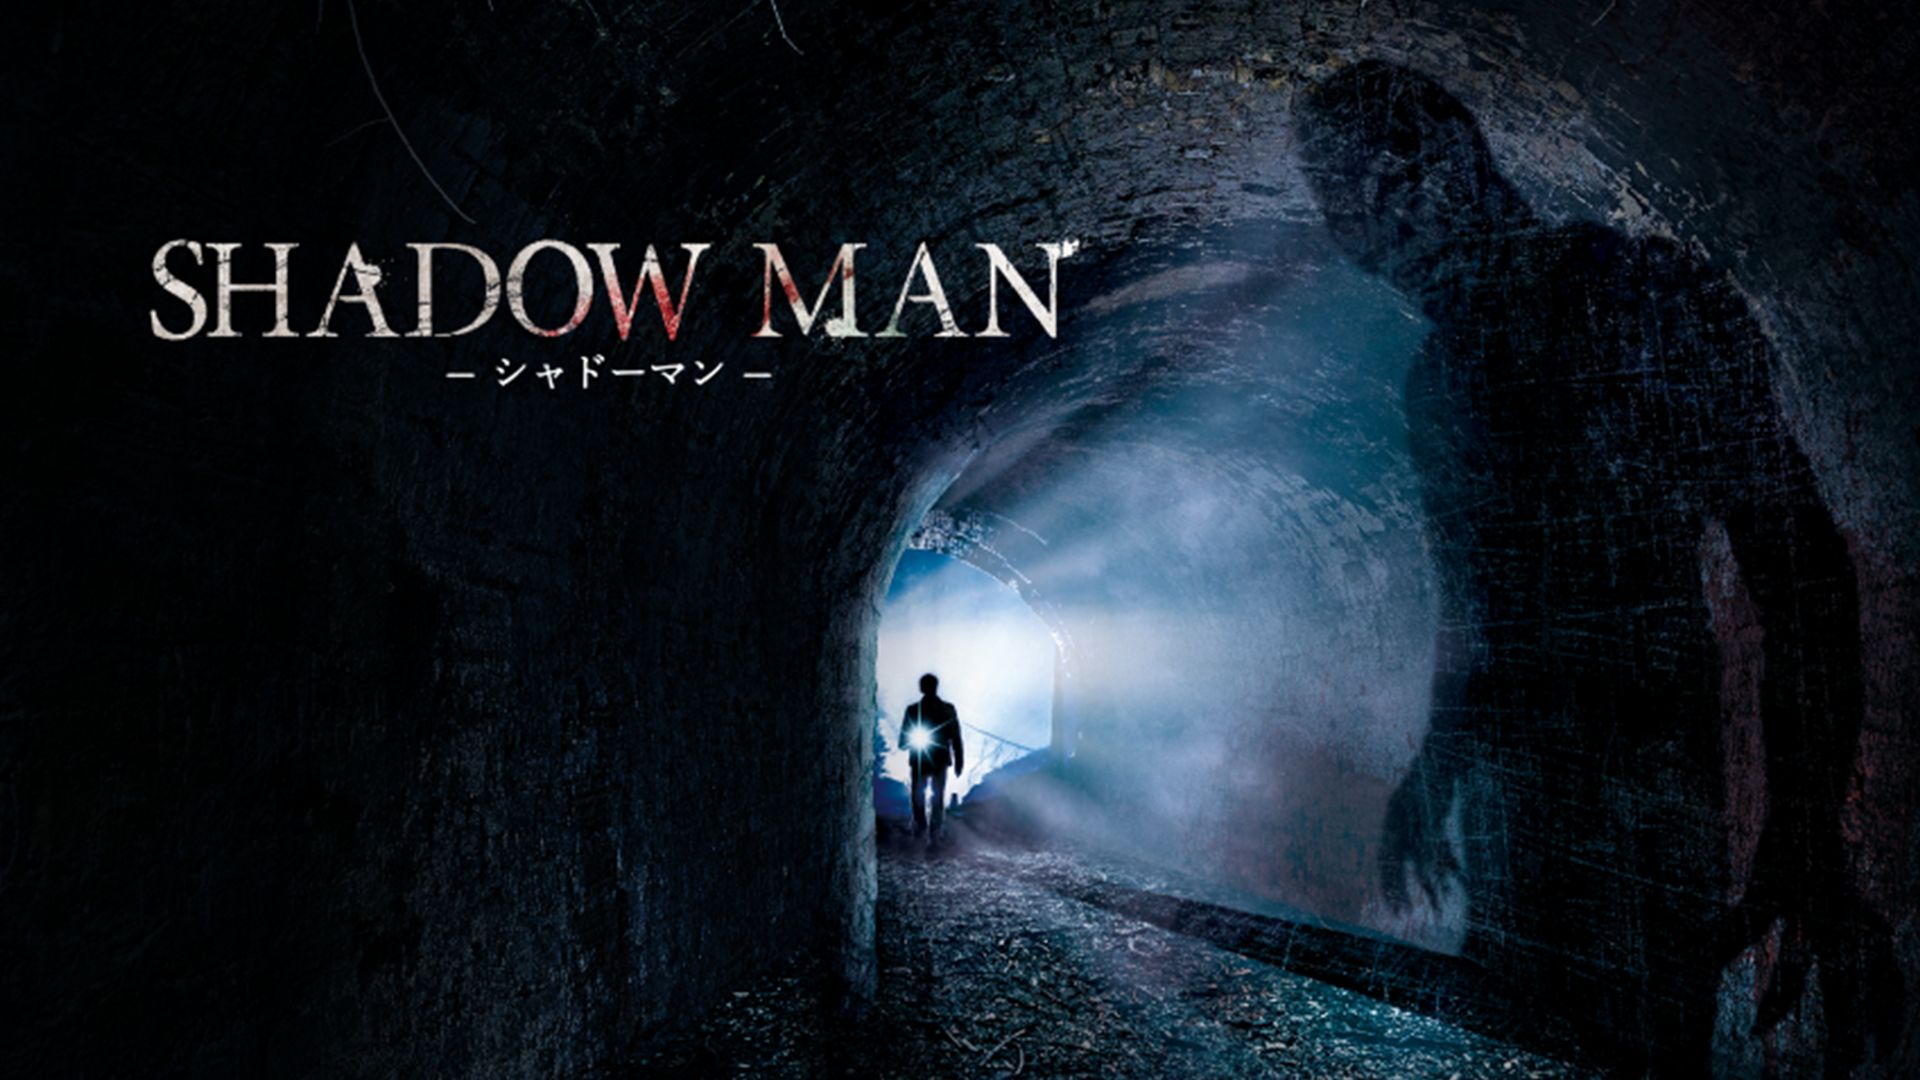 SHADOW MAN 〜シャドーマン〜